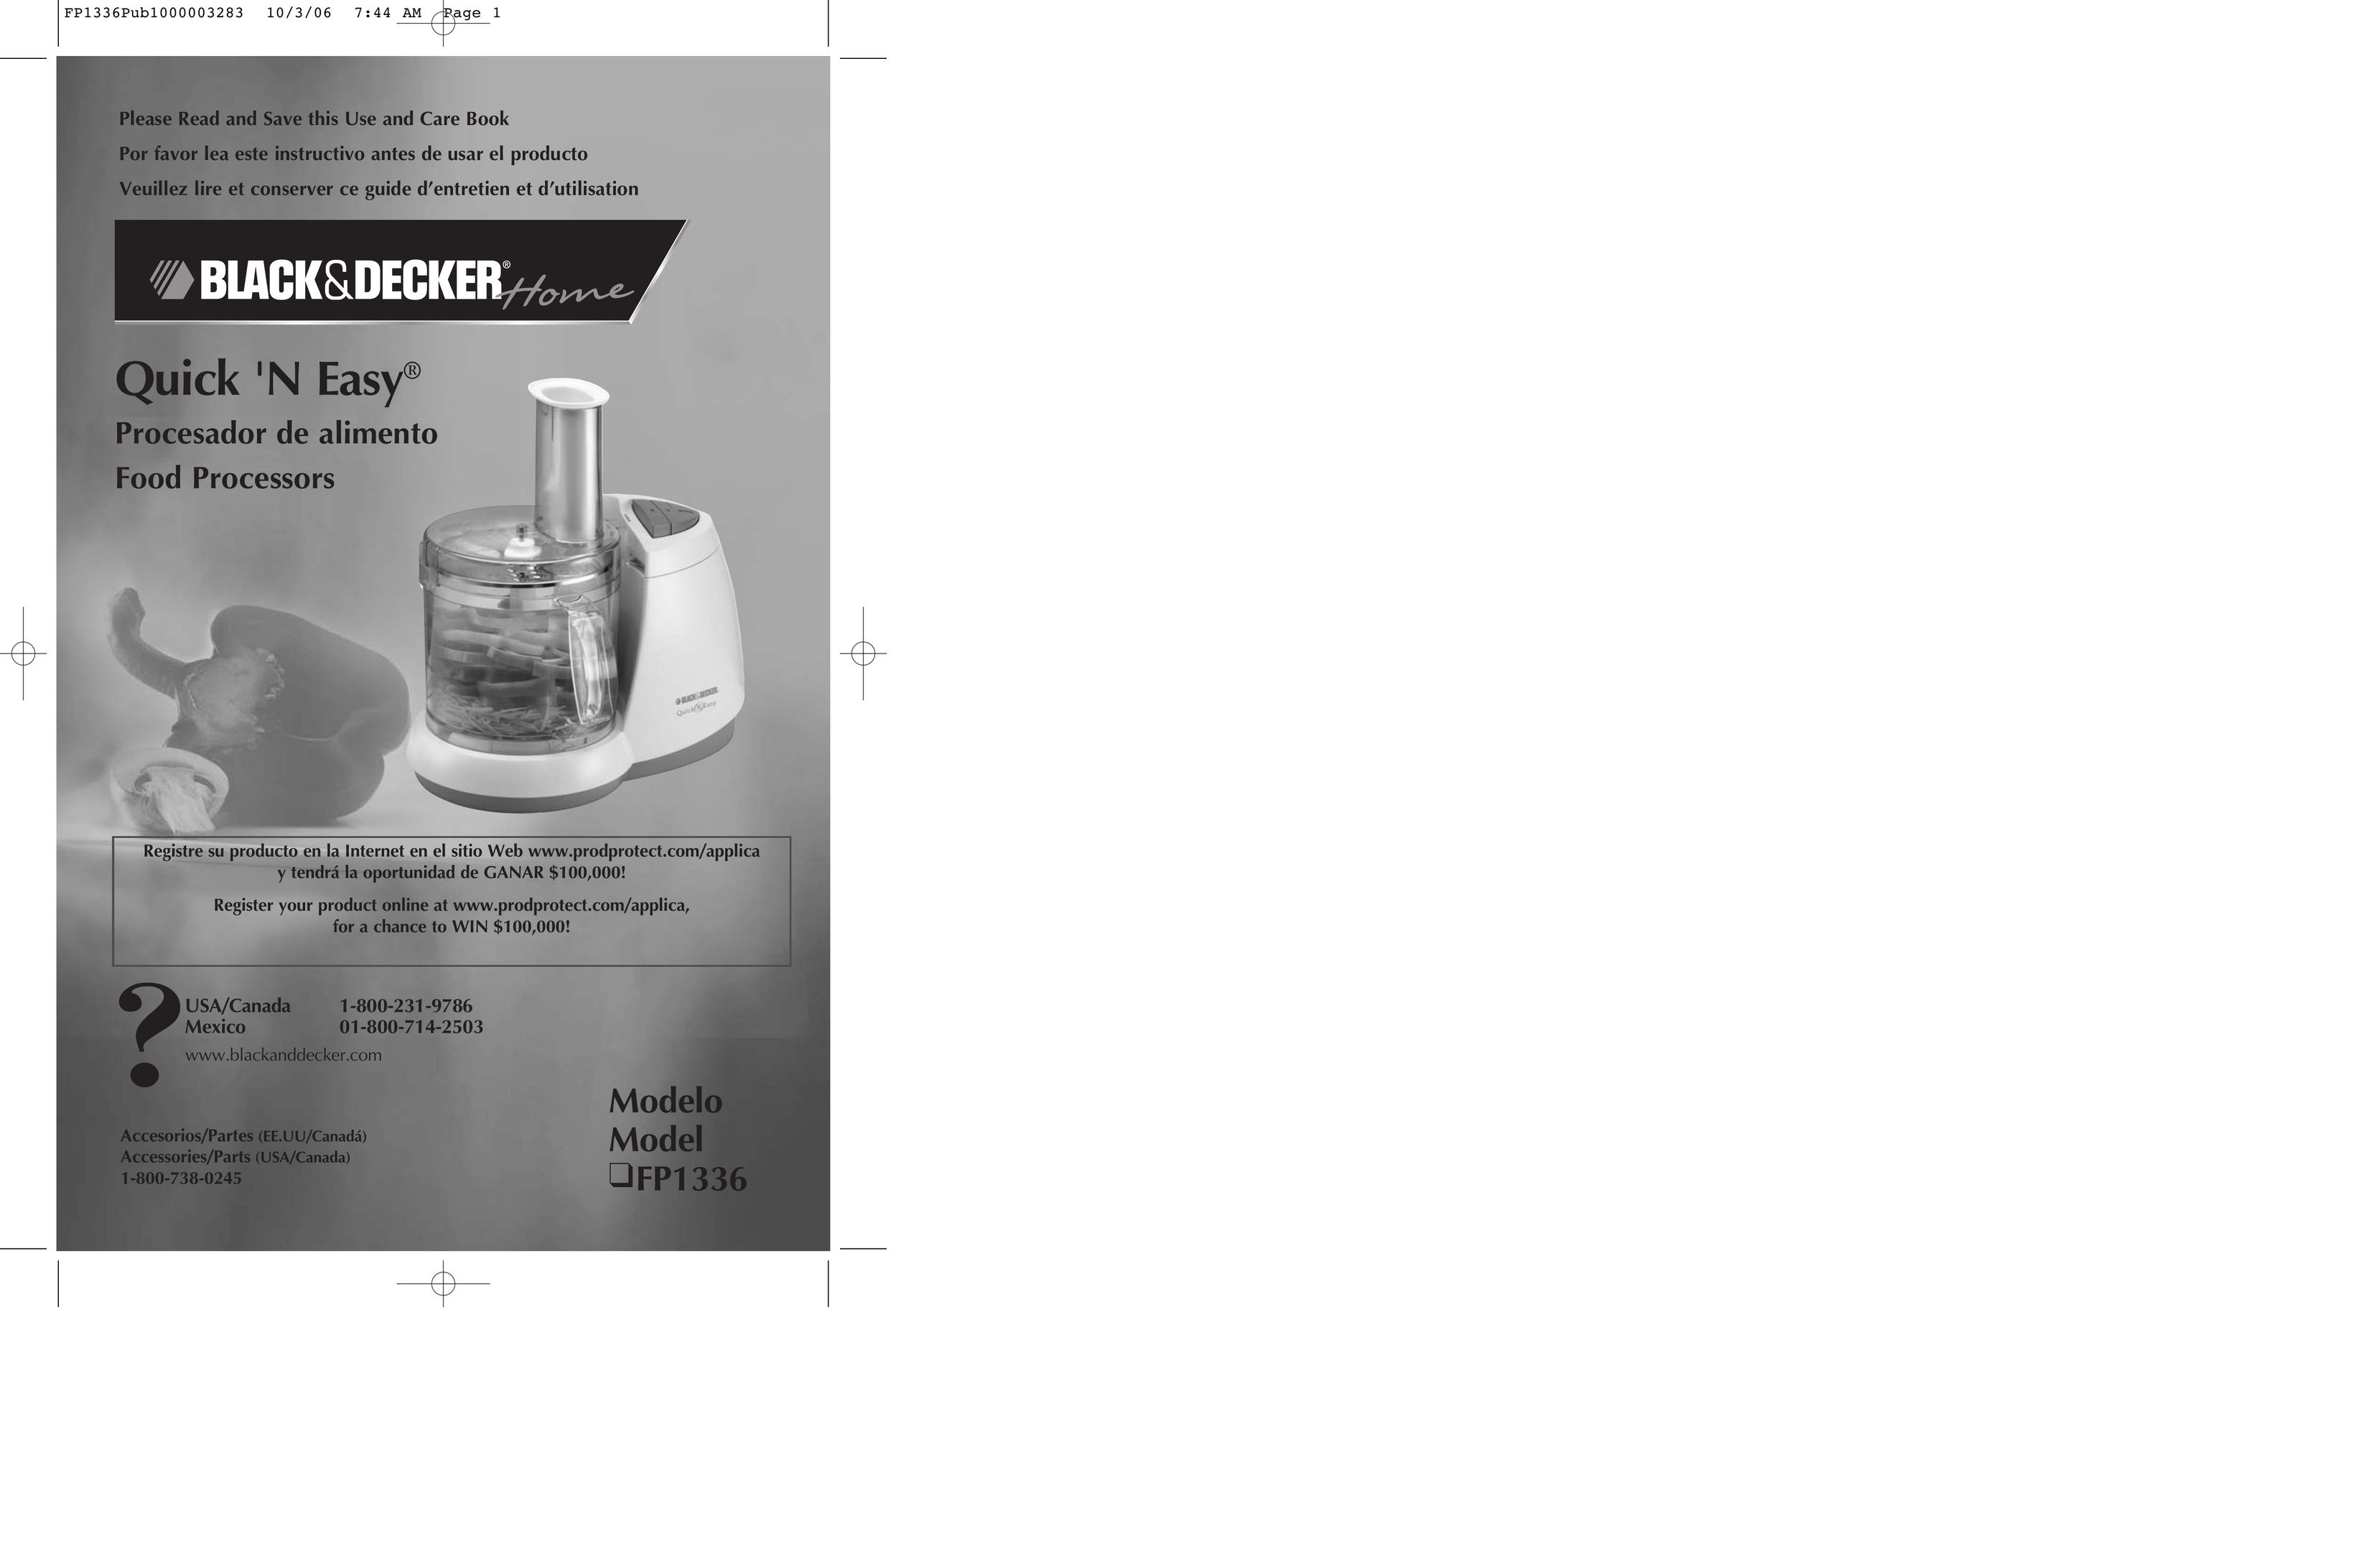 Black & Decker FP1336 Food Processor User Manual